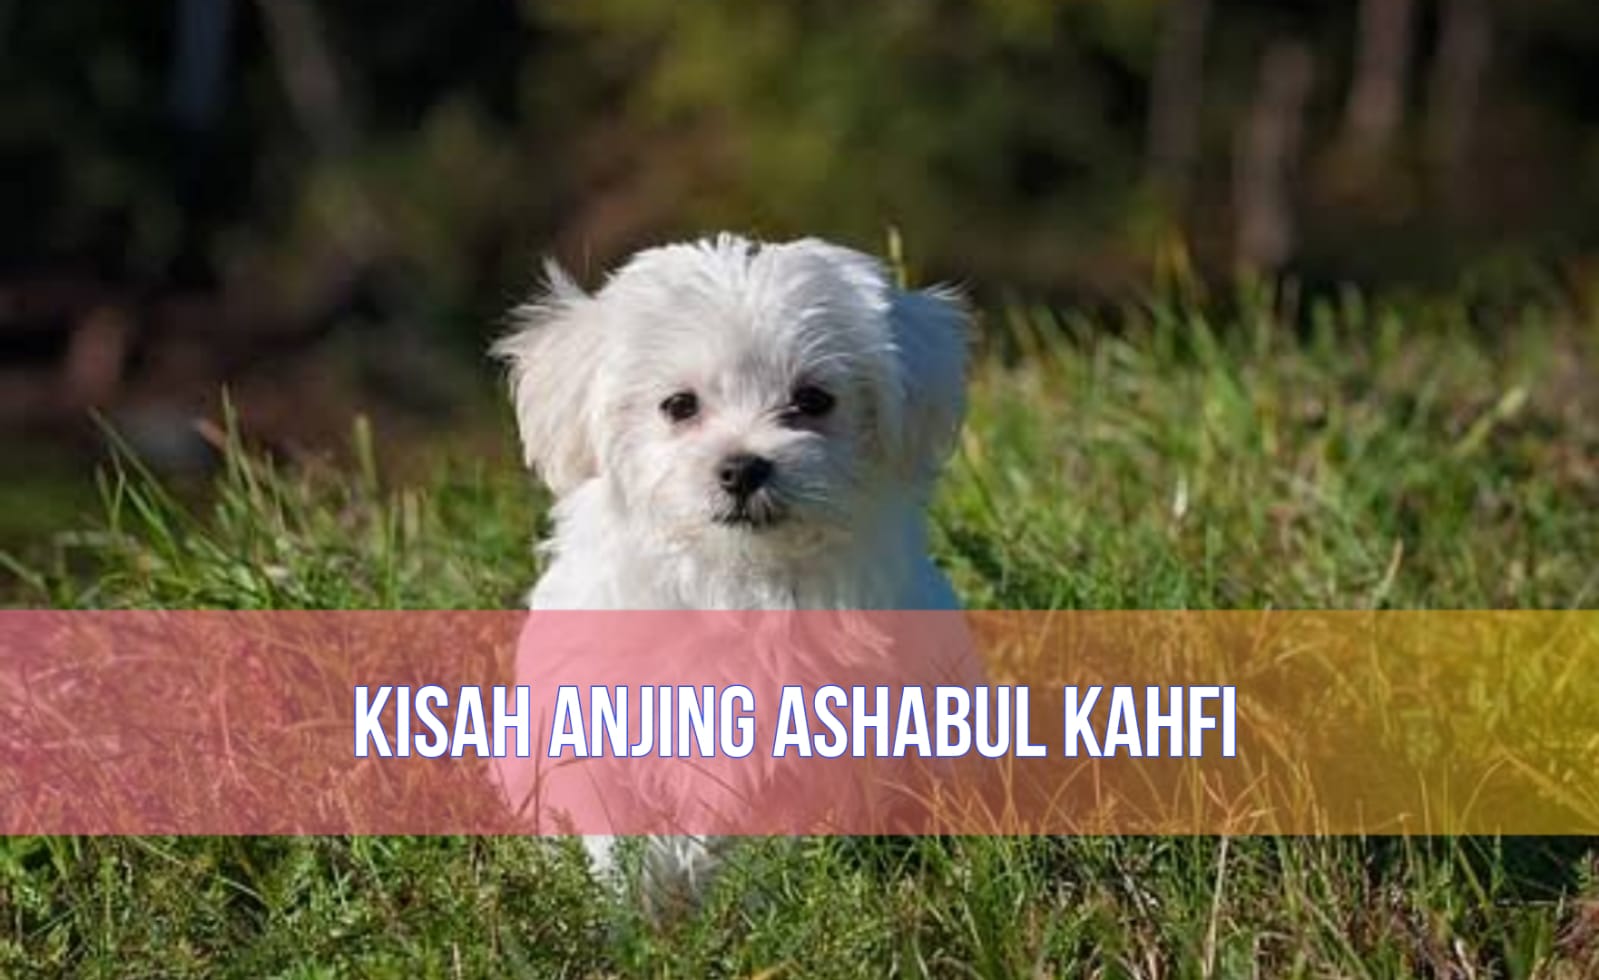 Anjing Ashabul Kahfi, Hewan Setia yang Dijanjikan Masuk Surga, Begini Kisahnya!